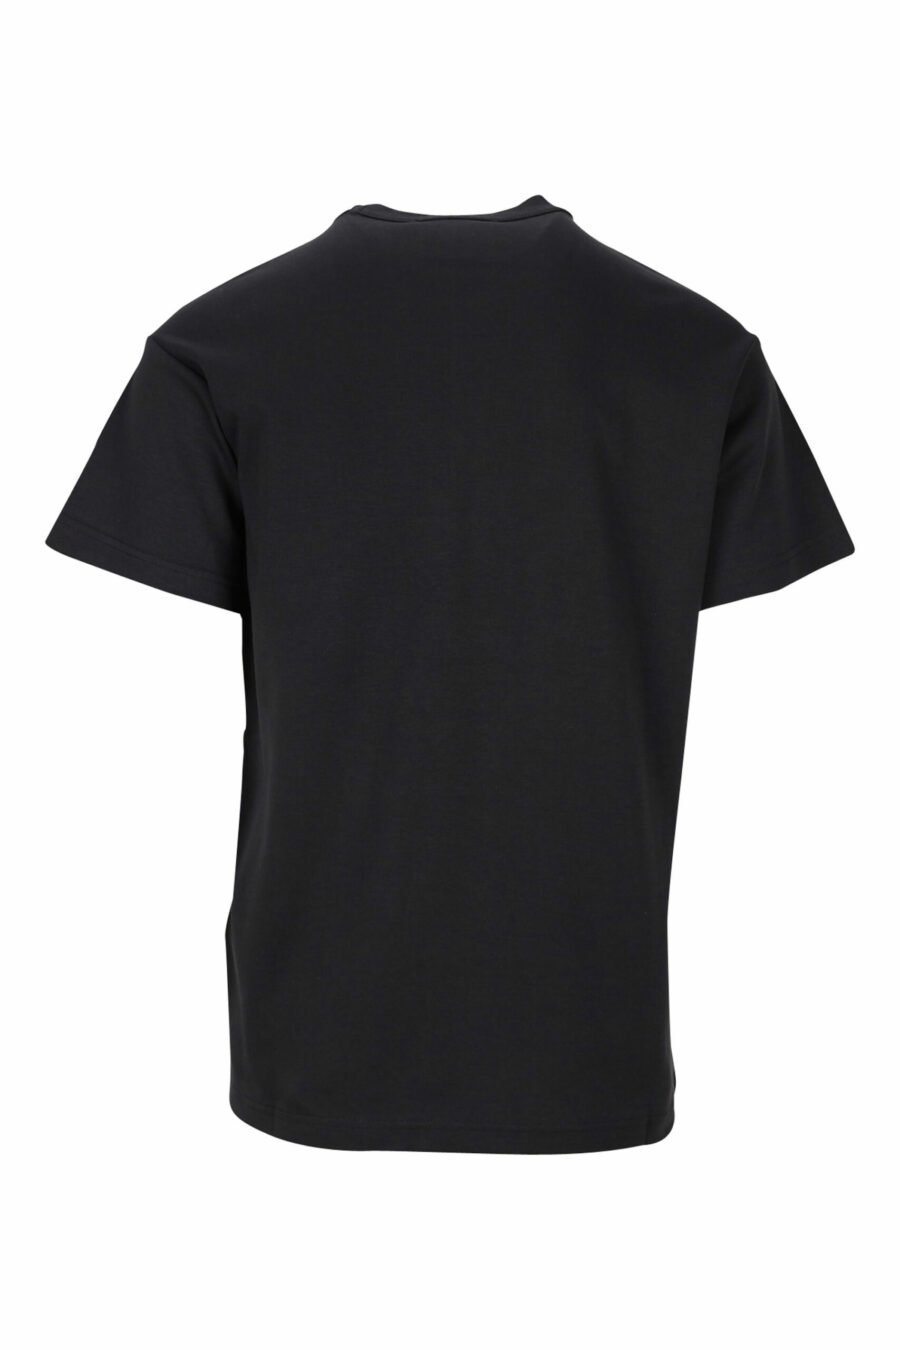 Schwarzes T-Shirt mit "spry" Grafik maxilogo - 8052019468816 1 skaliert